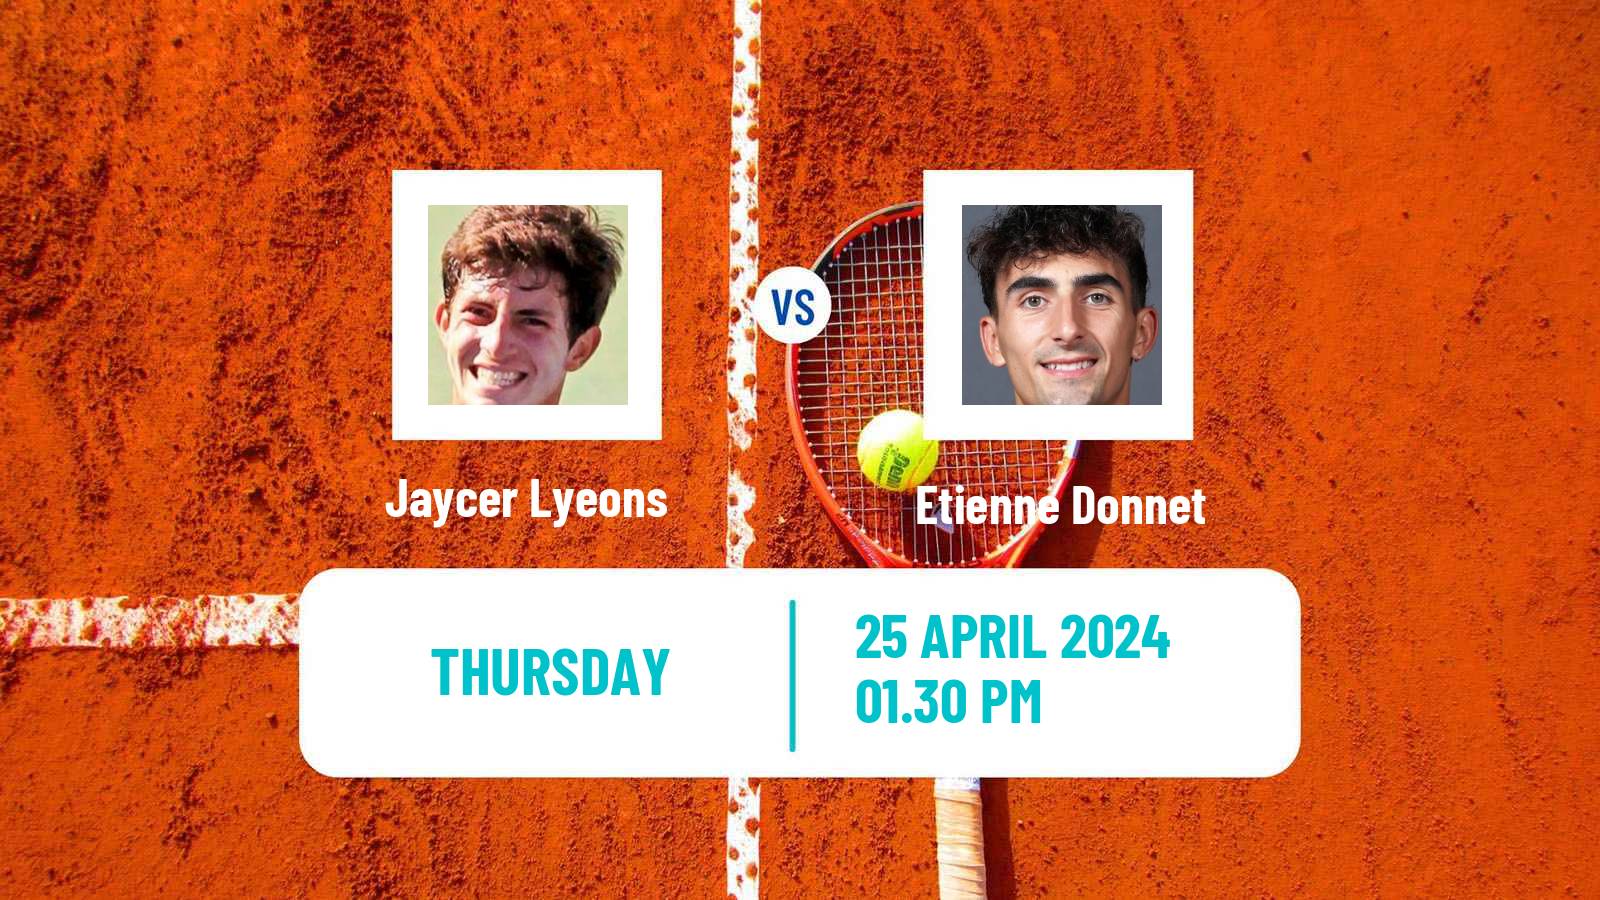 Tennis ITF M15 Vero Beach Fl Men Jaycer Lyeons - Etienne Donnet